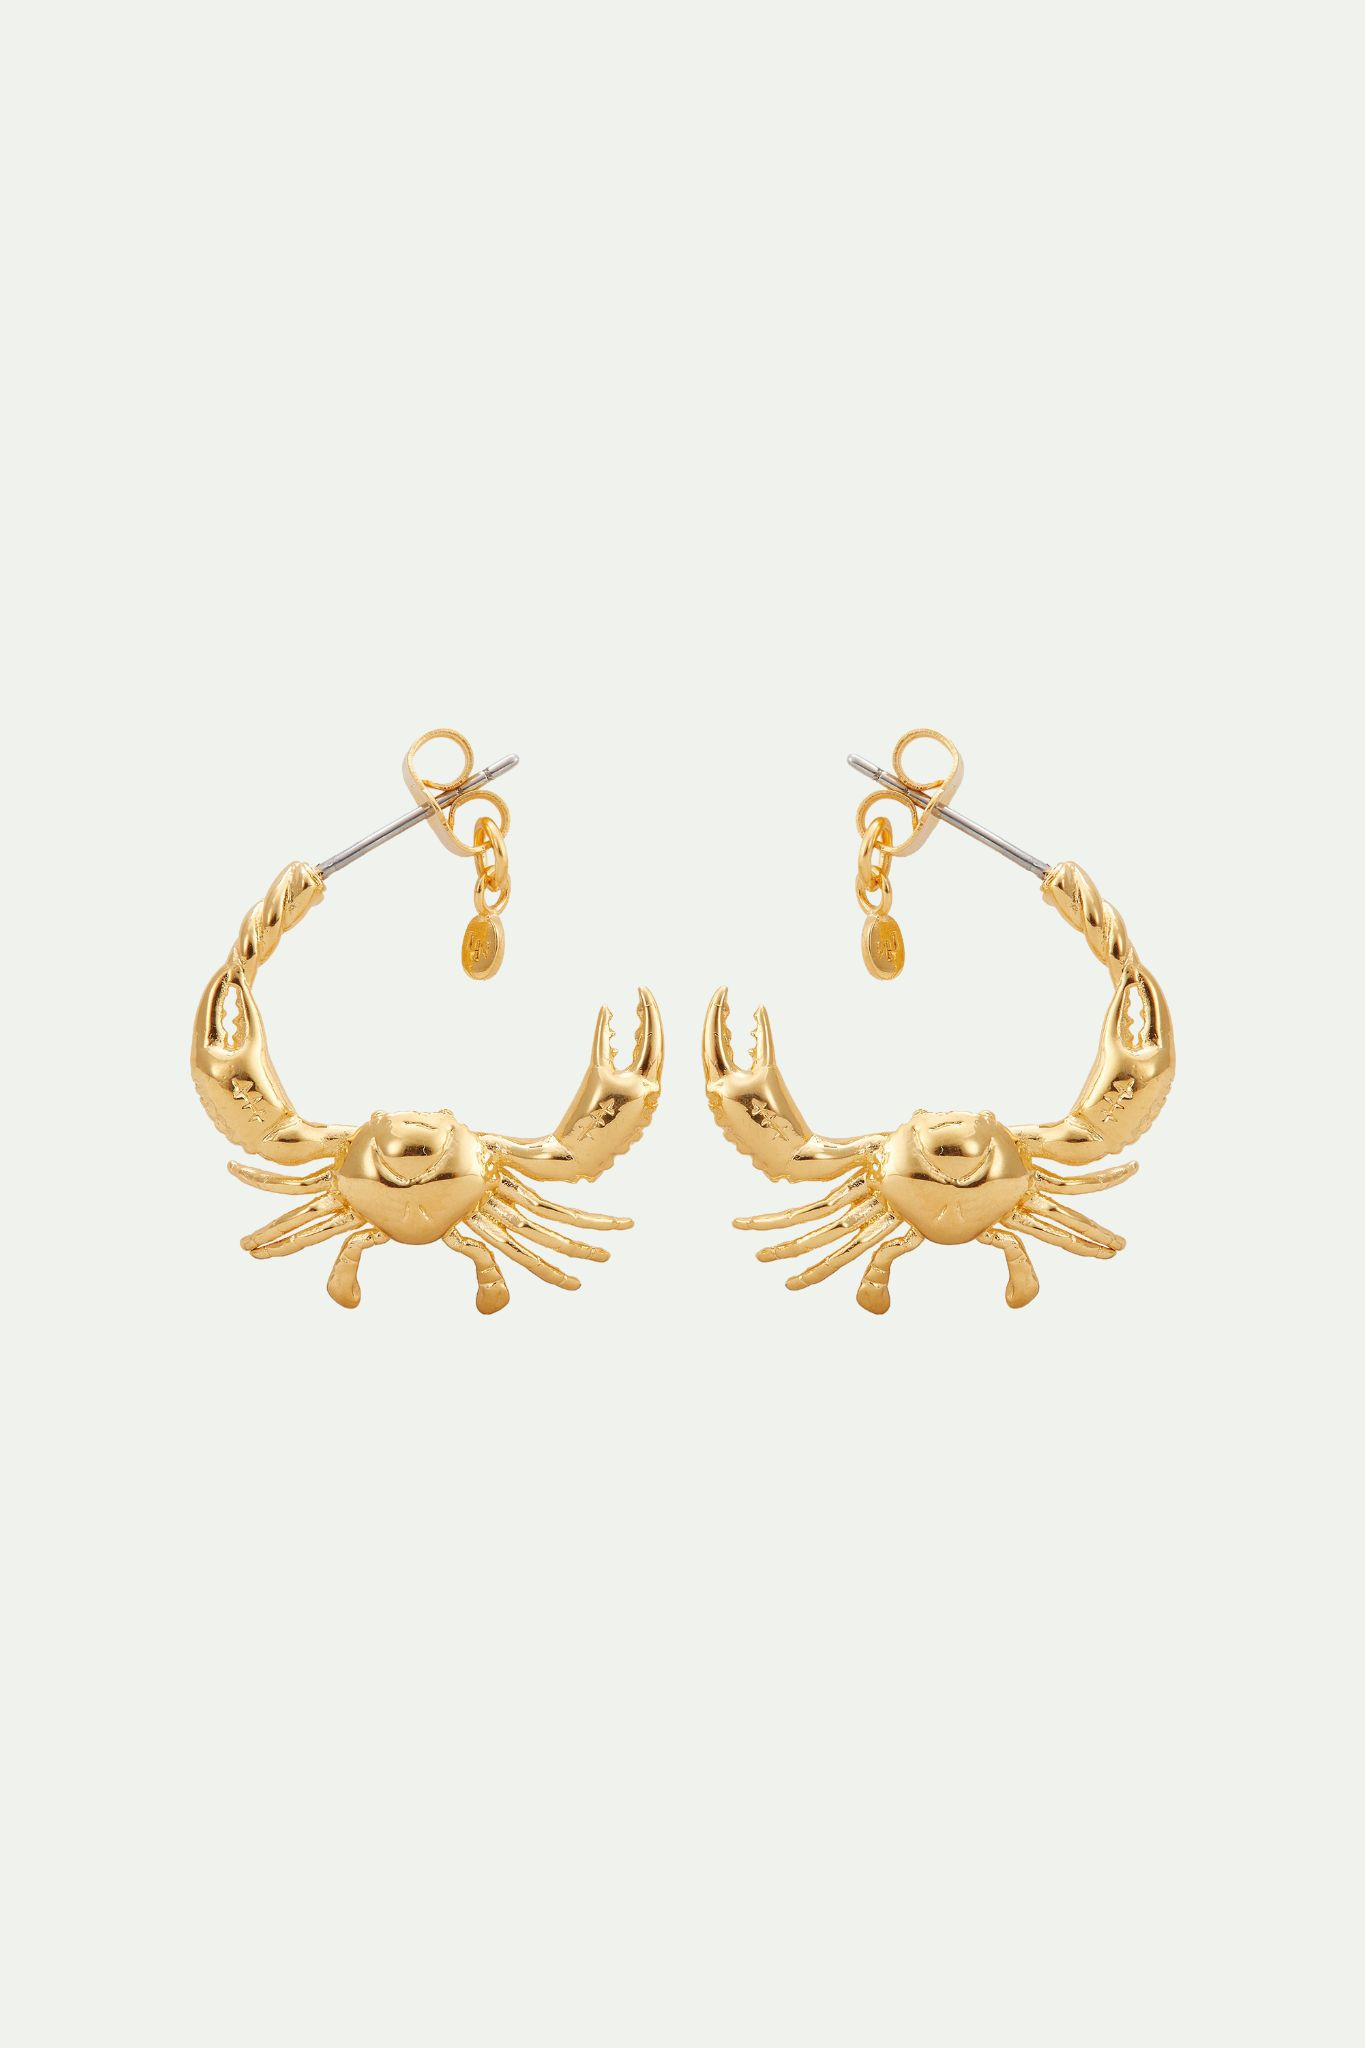 Cancer zodiac sign hoops earrings